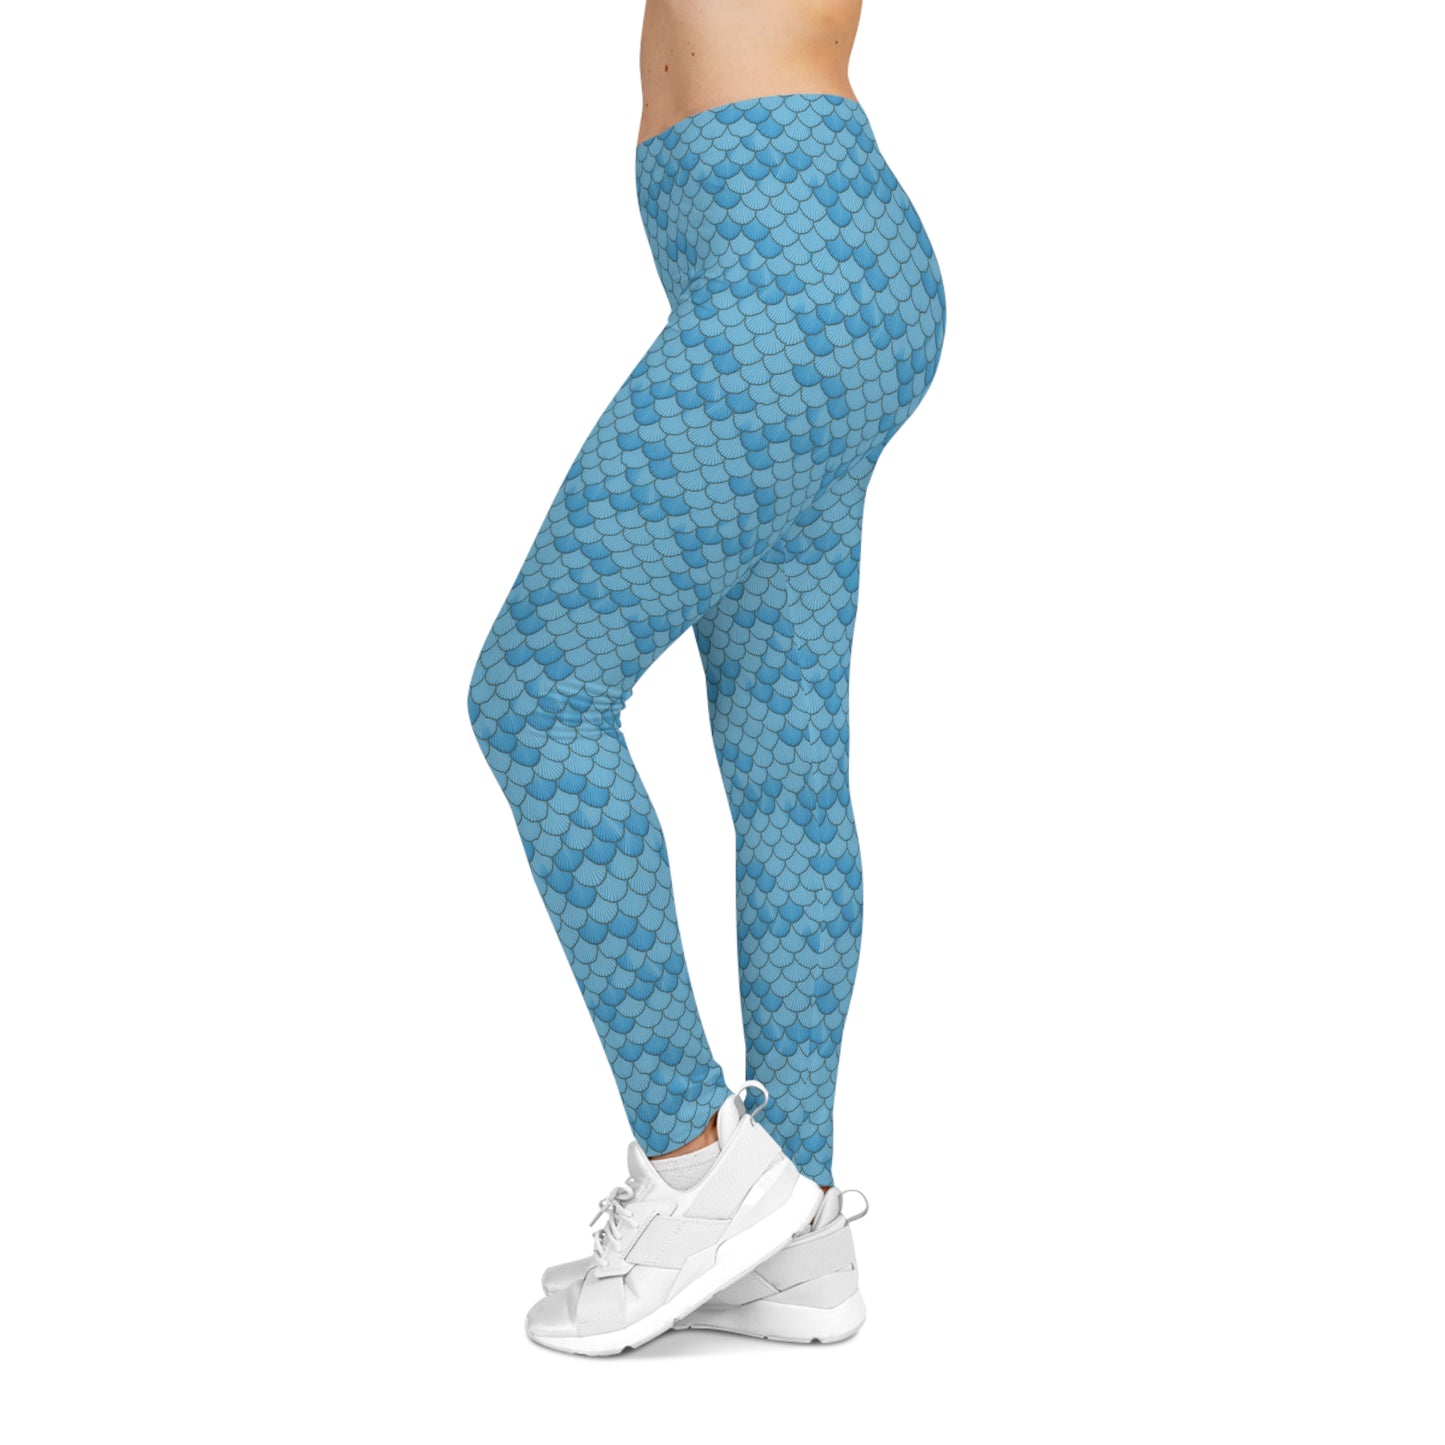 Low Waist Blue Seashell Mermaid Design - Women's Casual Leggings - Smooth & Comfortable, Gym Gear, Workout, Yoga, Stylish, Ocean Lover